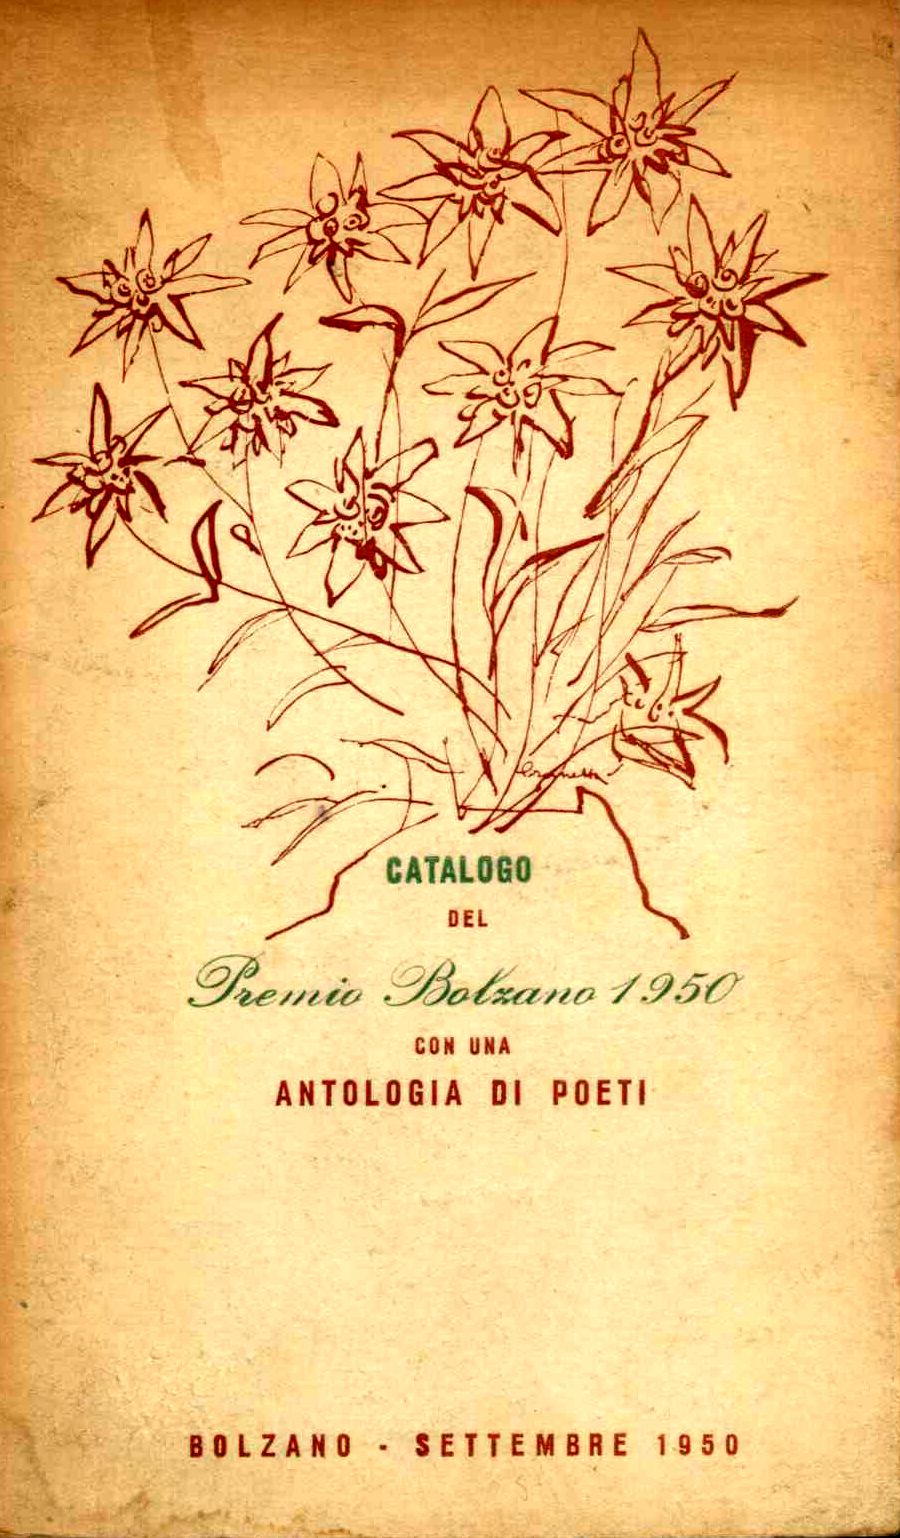 Catalogo del premio Bolzano 1950